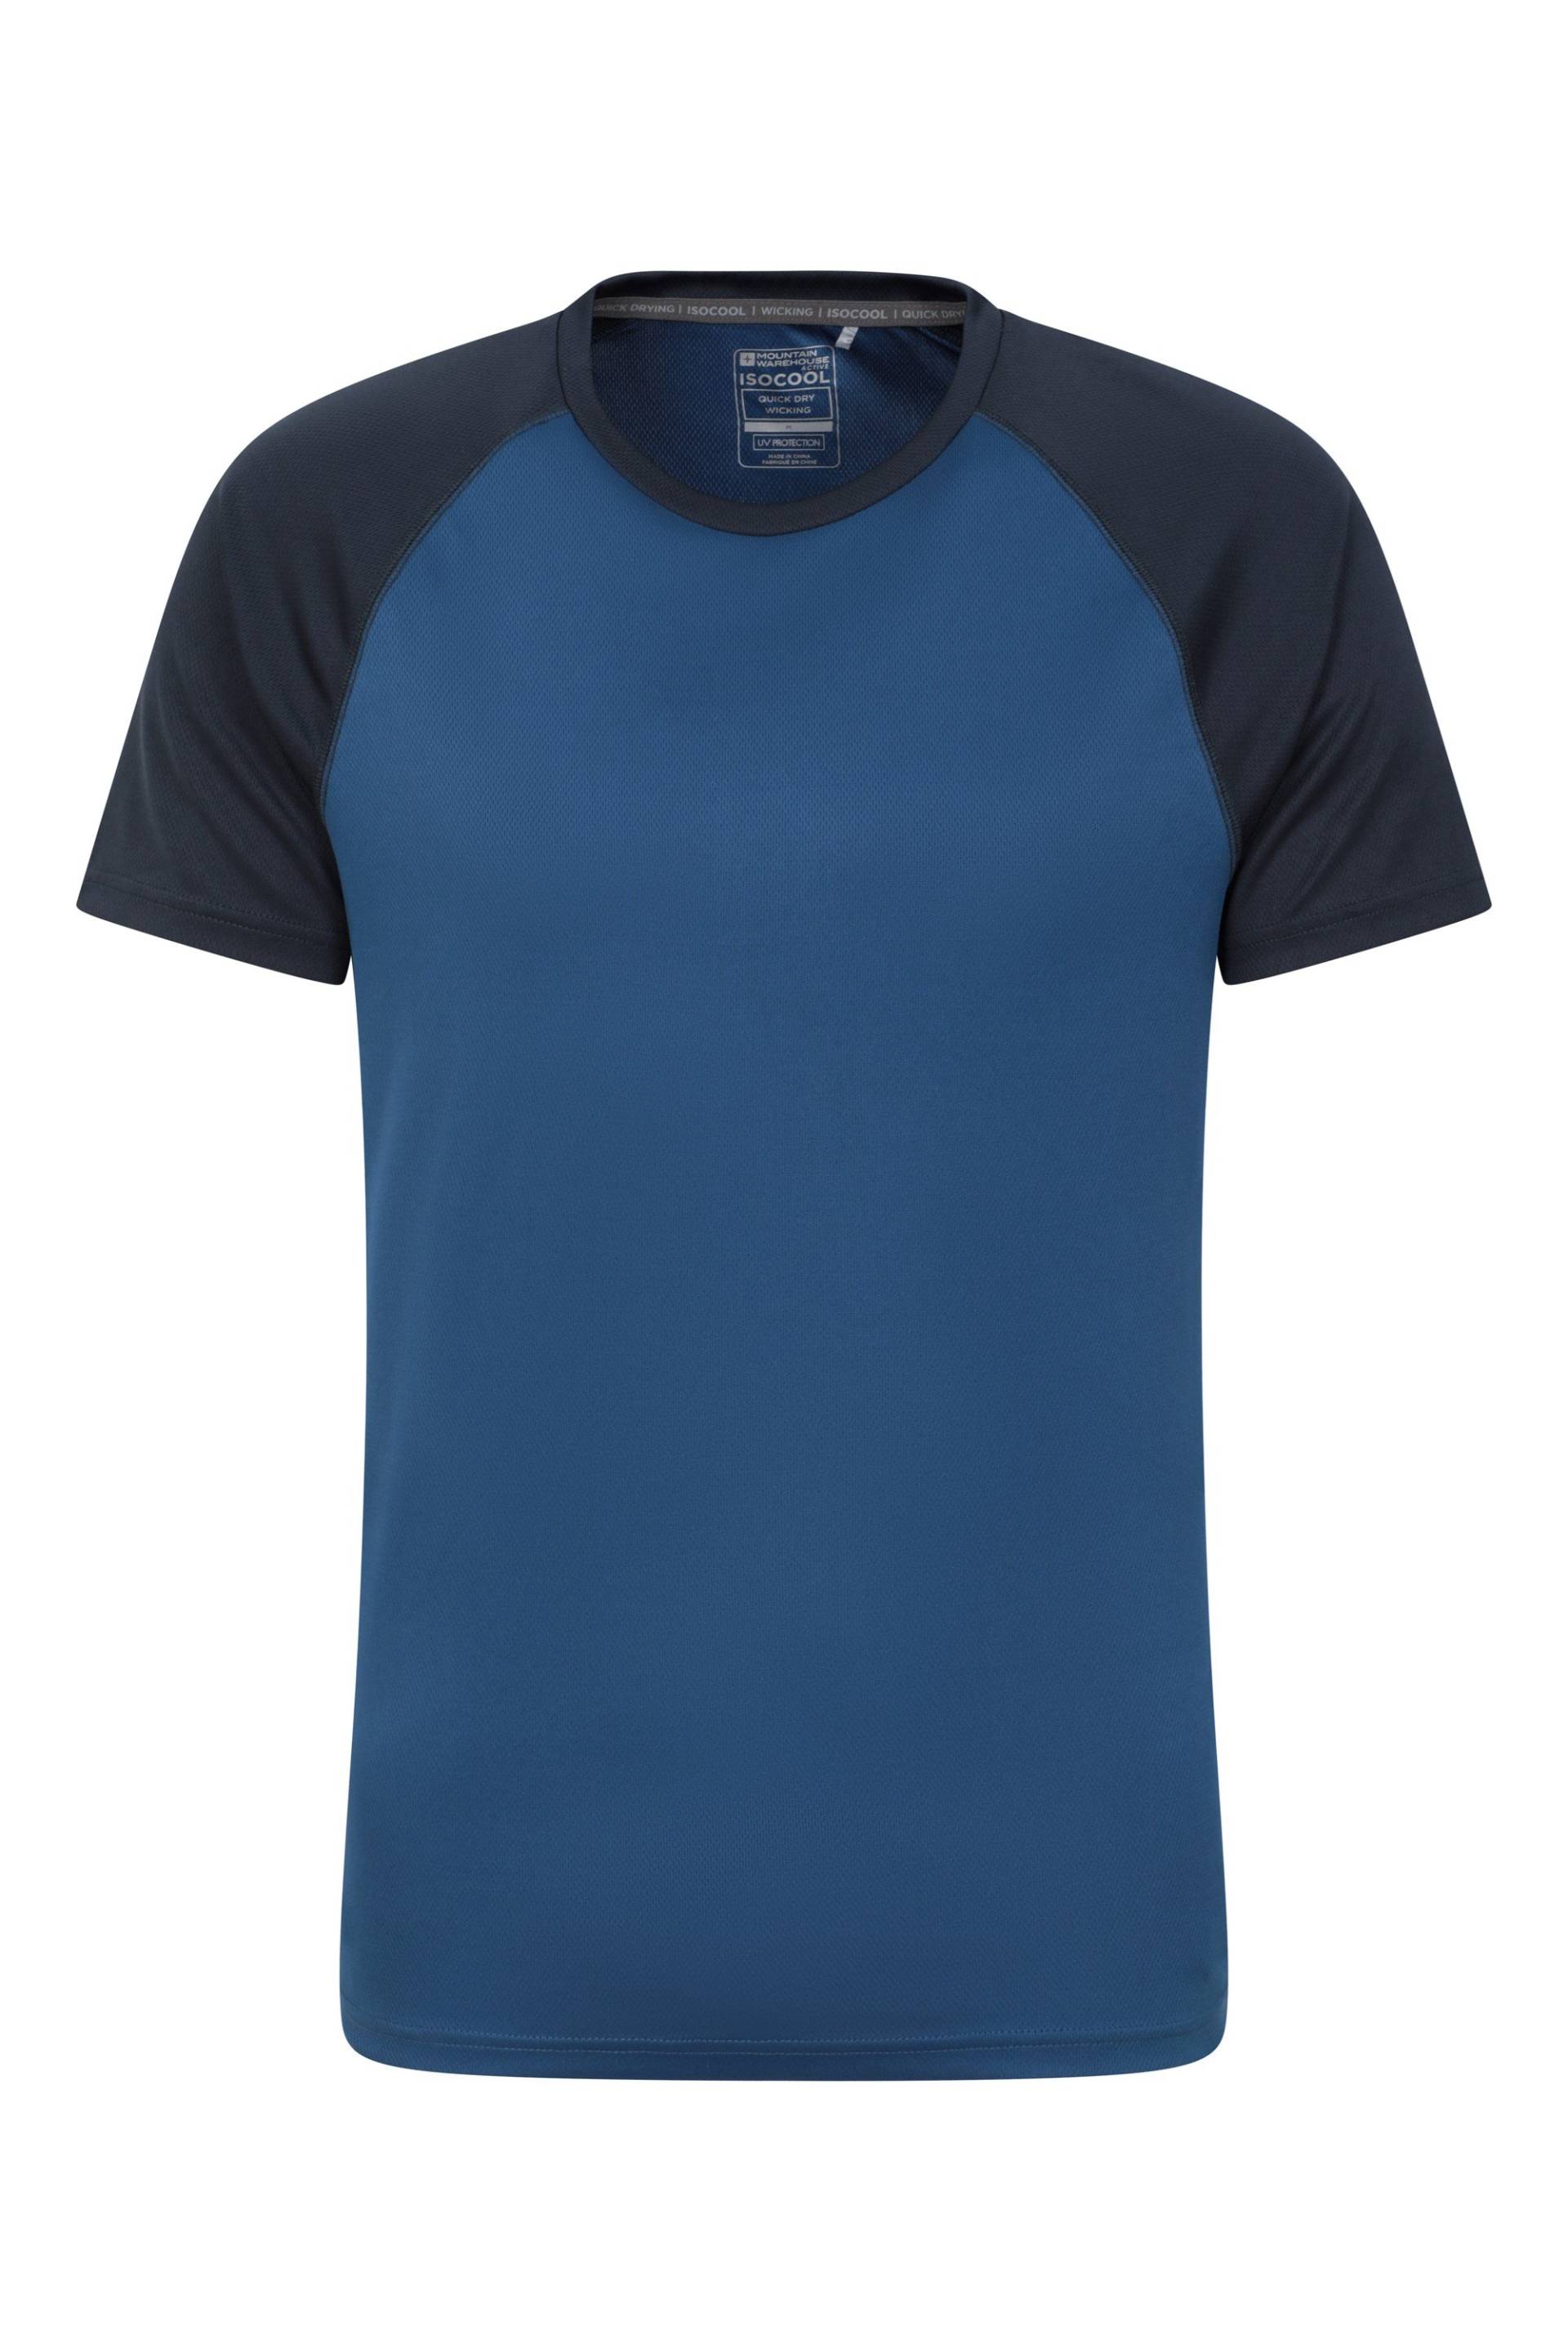 Endurance Herren T-Shirt - Blau von Mountain Warehouse